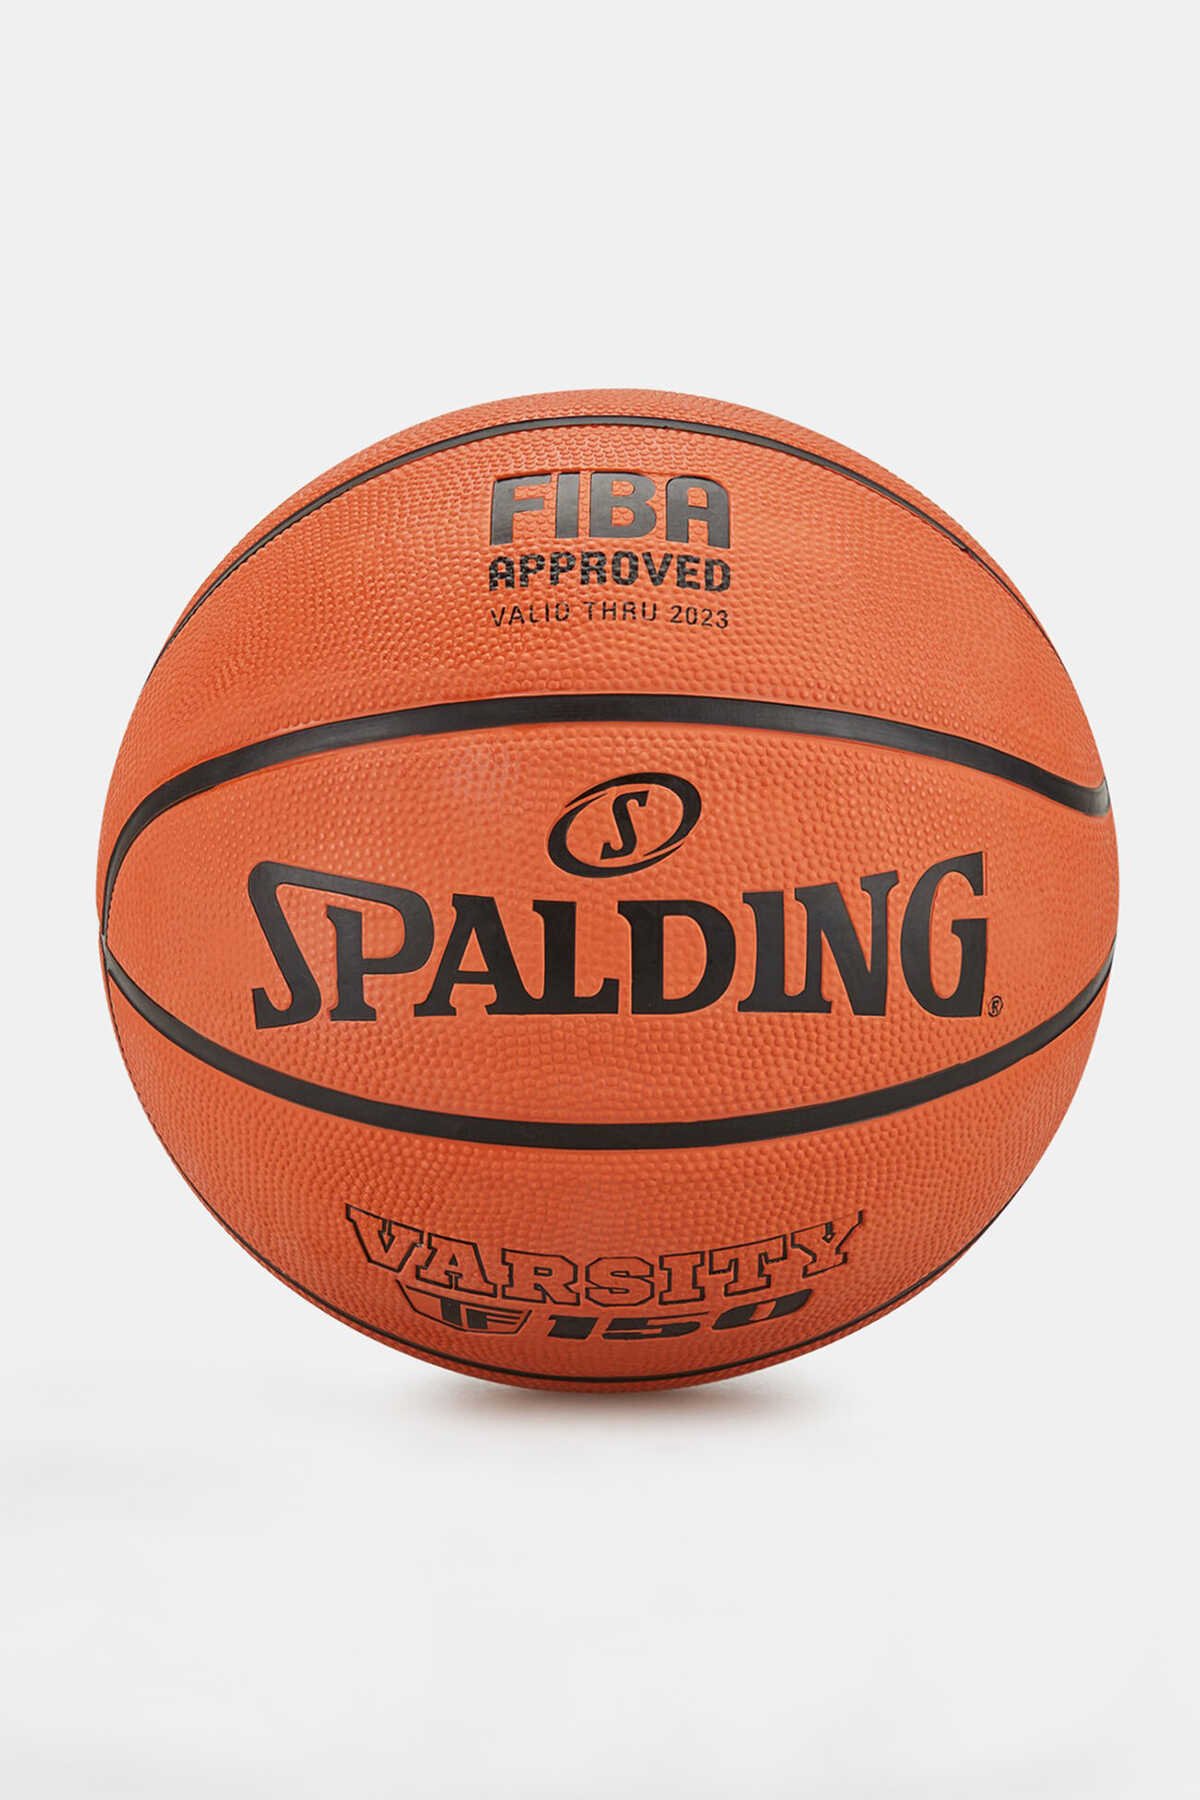 Spalding - Spalding TF-150 Basketbol Topu Varsity Size:6 FIBA Onaylı ( Basketbol Topları